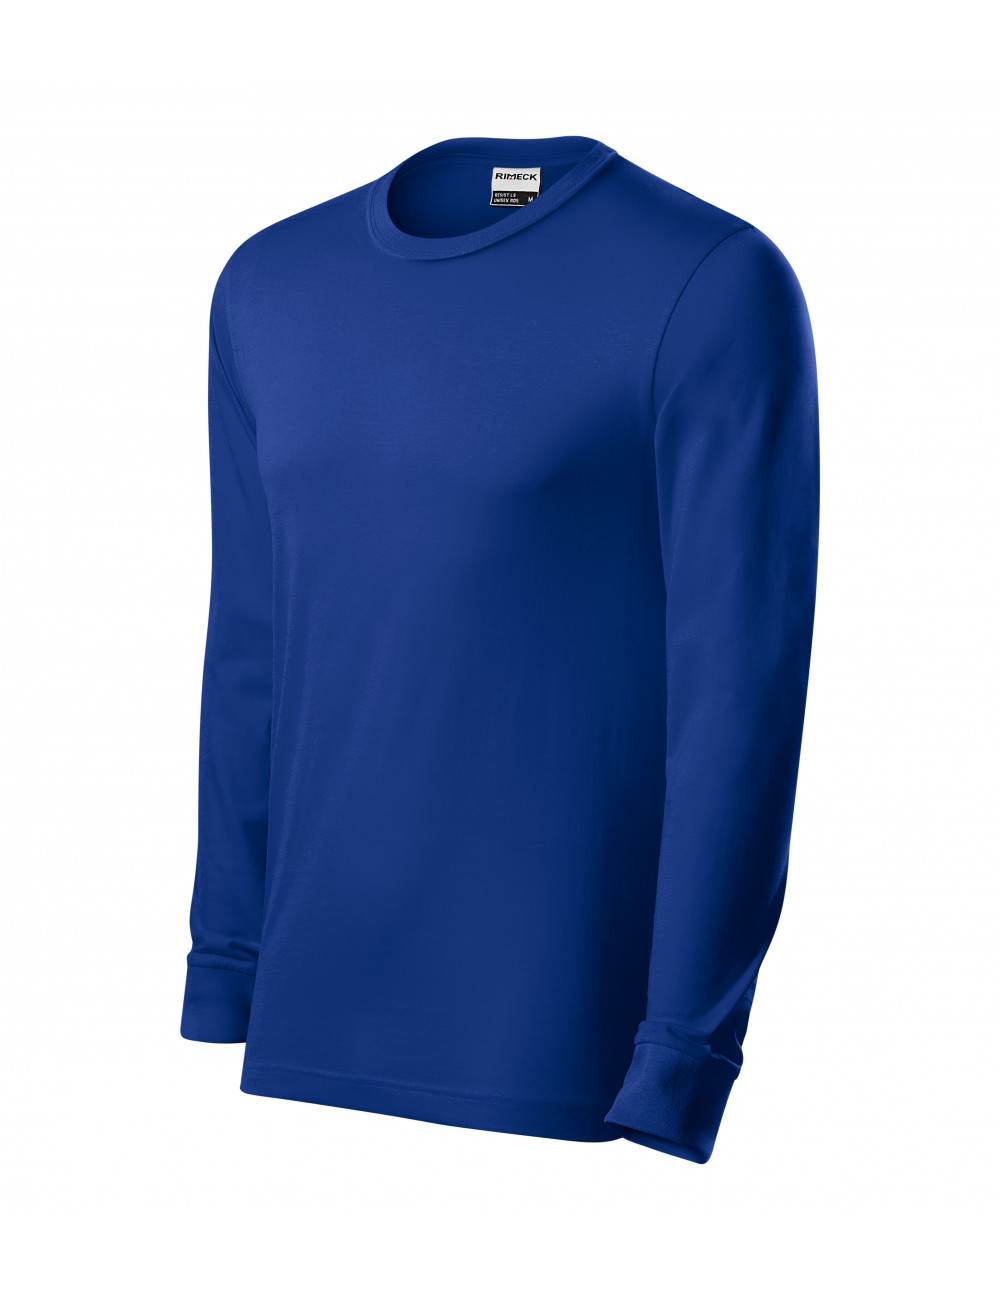 Unisex t-shirt resist ls r05 cornflower blue Adler Rimeck